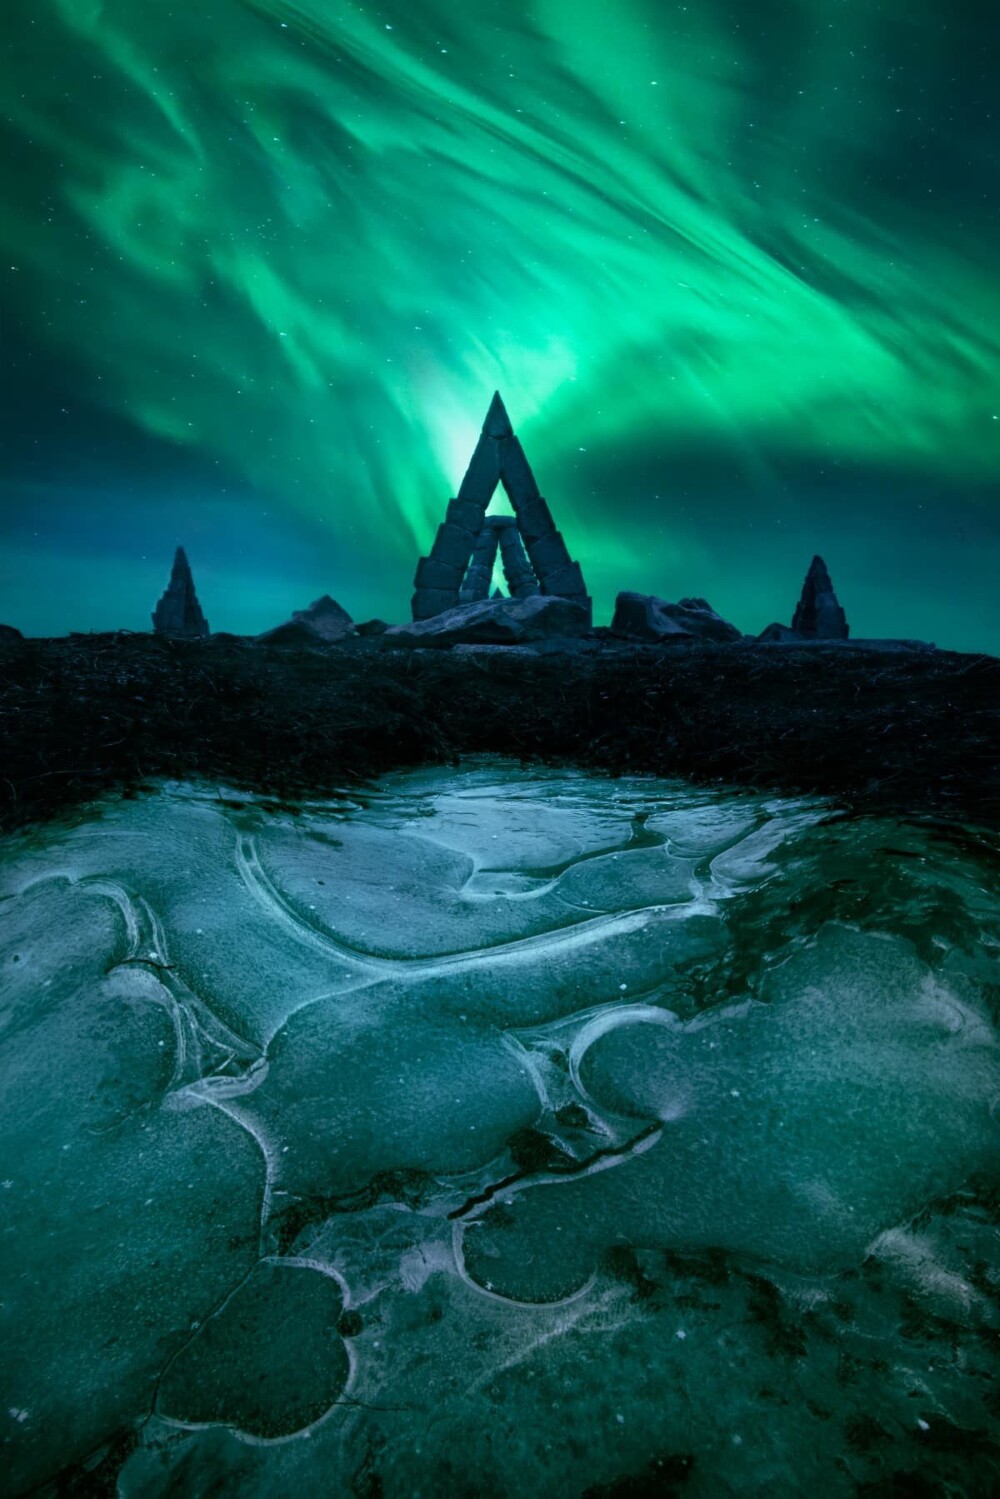 "Ворота Арктики", Даниэль Винье Гарсия, категория "Северное сияние" Место съемки: Рауфархёфн, Исландия